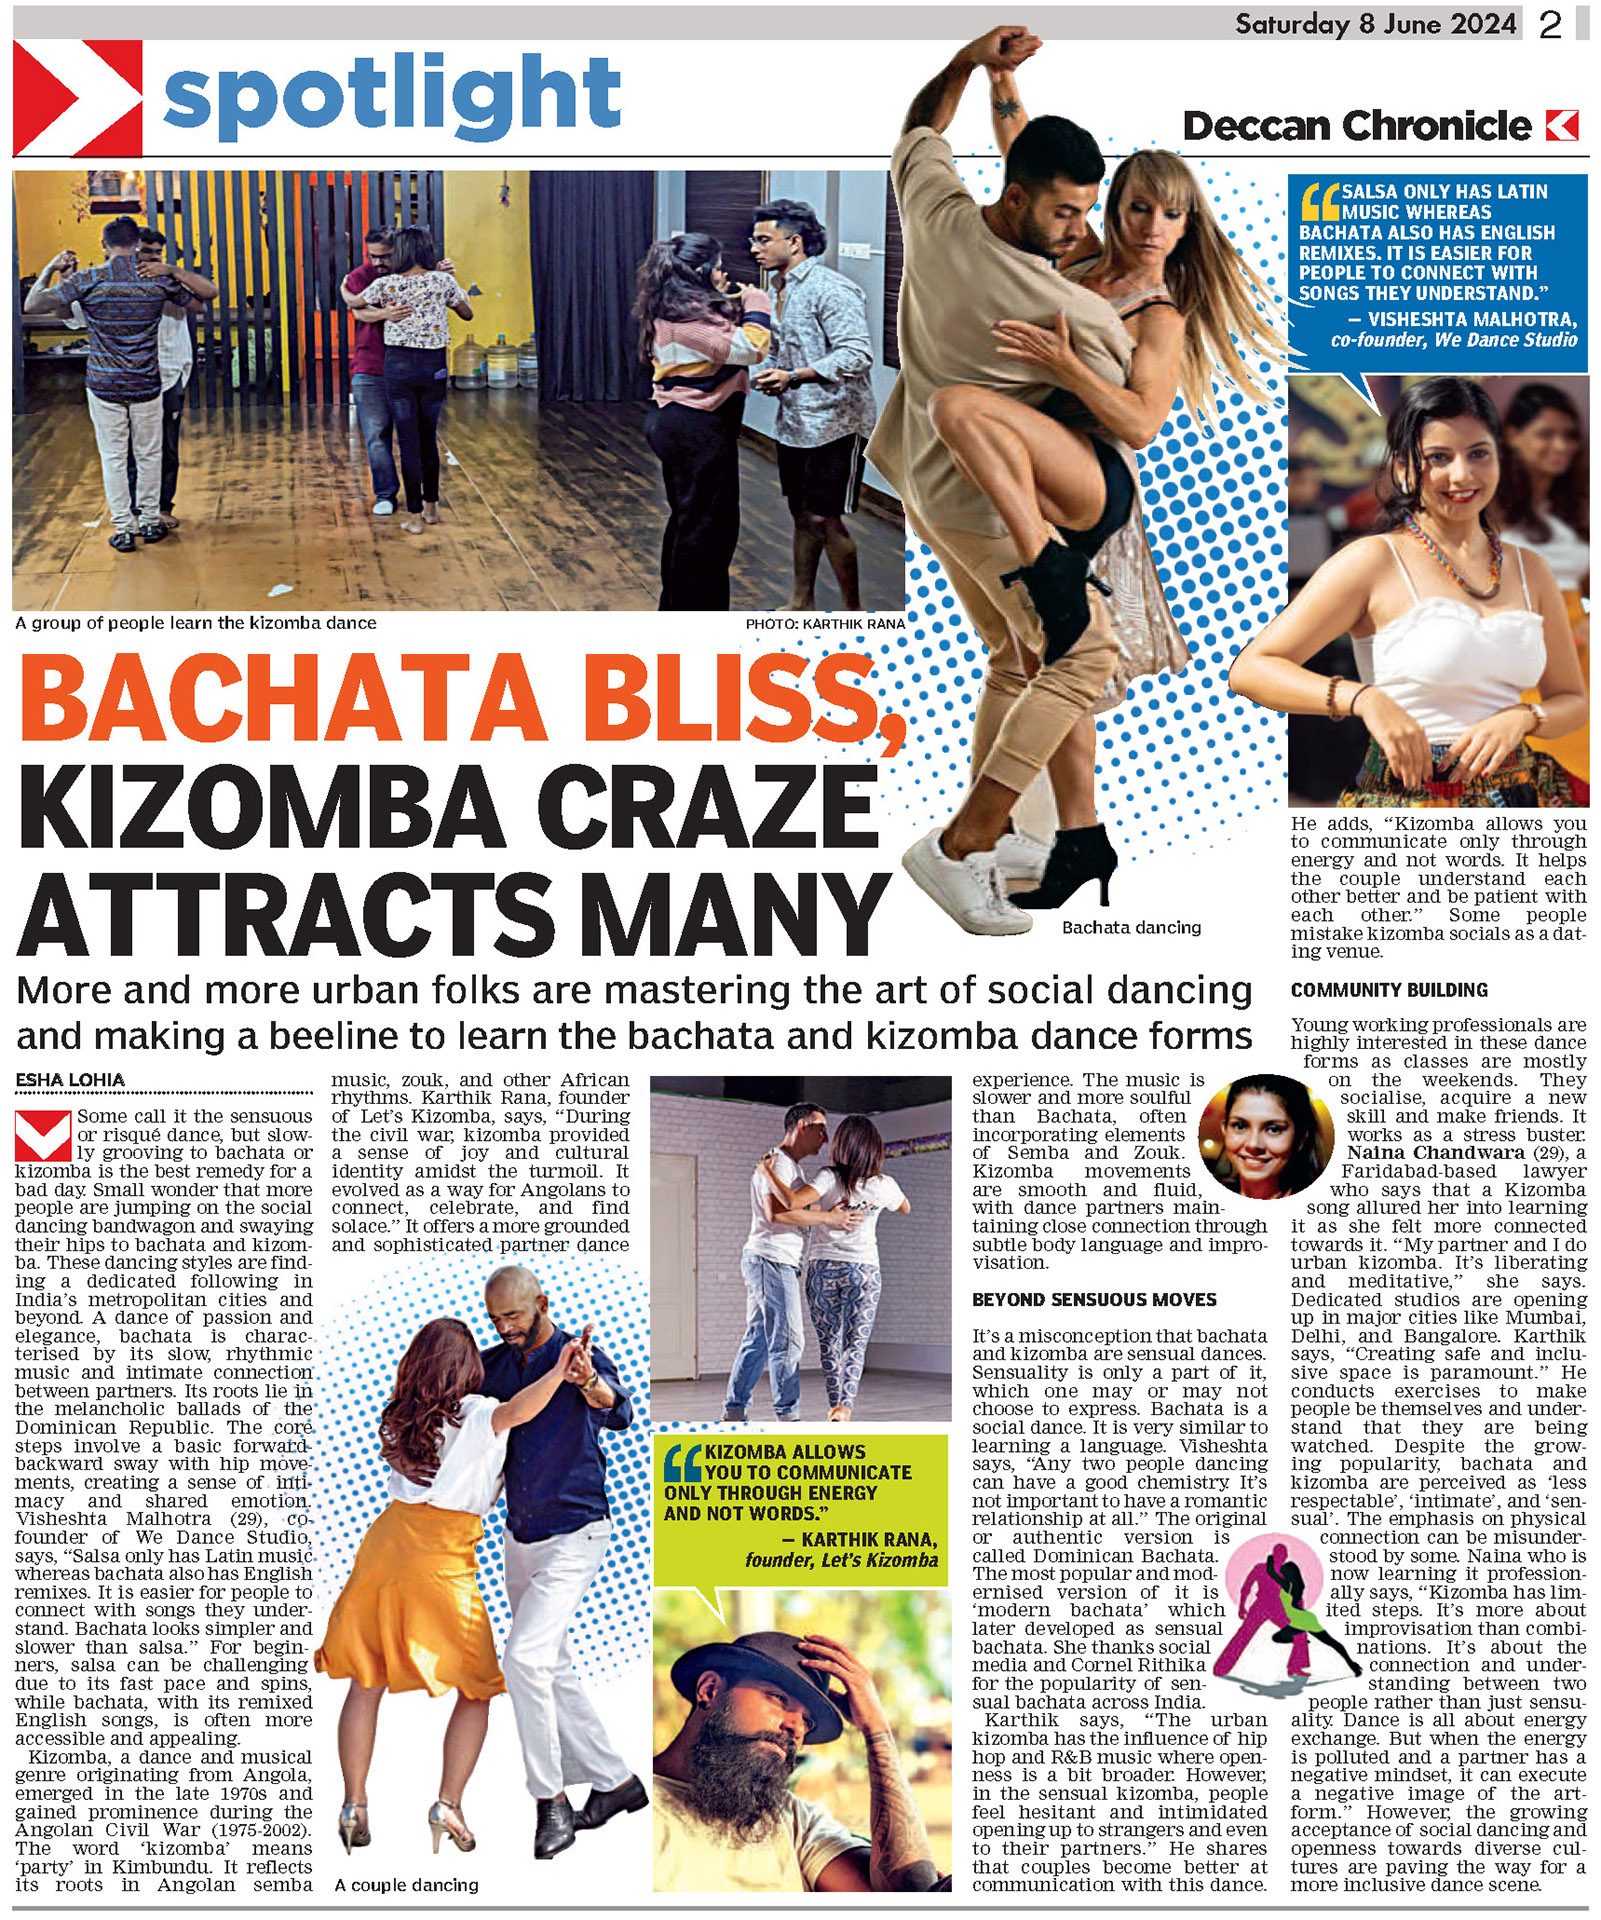 Naina - The Vow Delhi NCR - Bachata Bliss Kizomba Craze Attracts Many - Dance With Me India